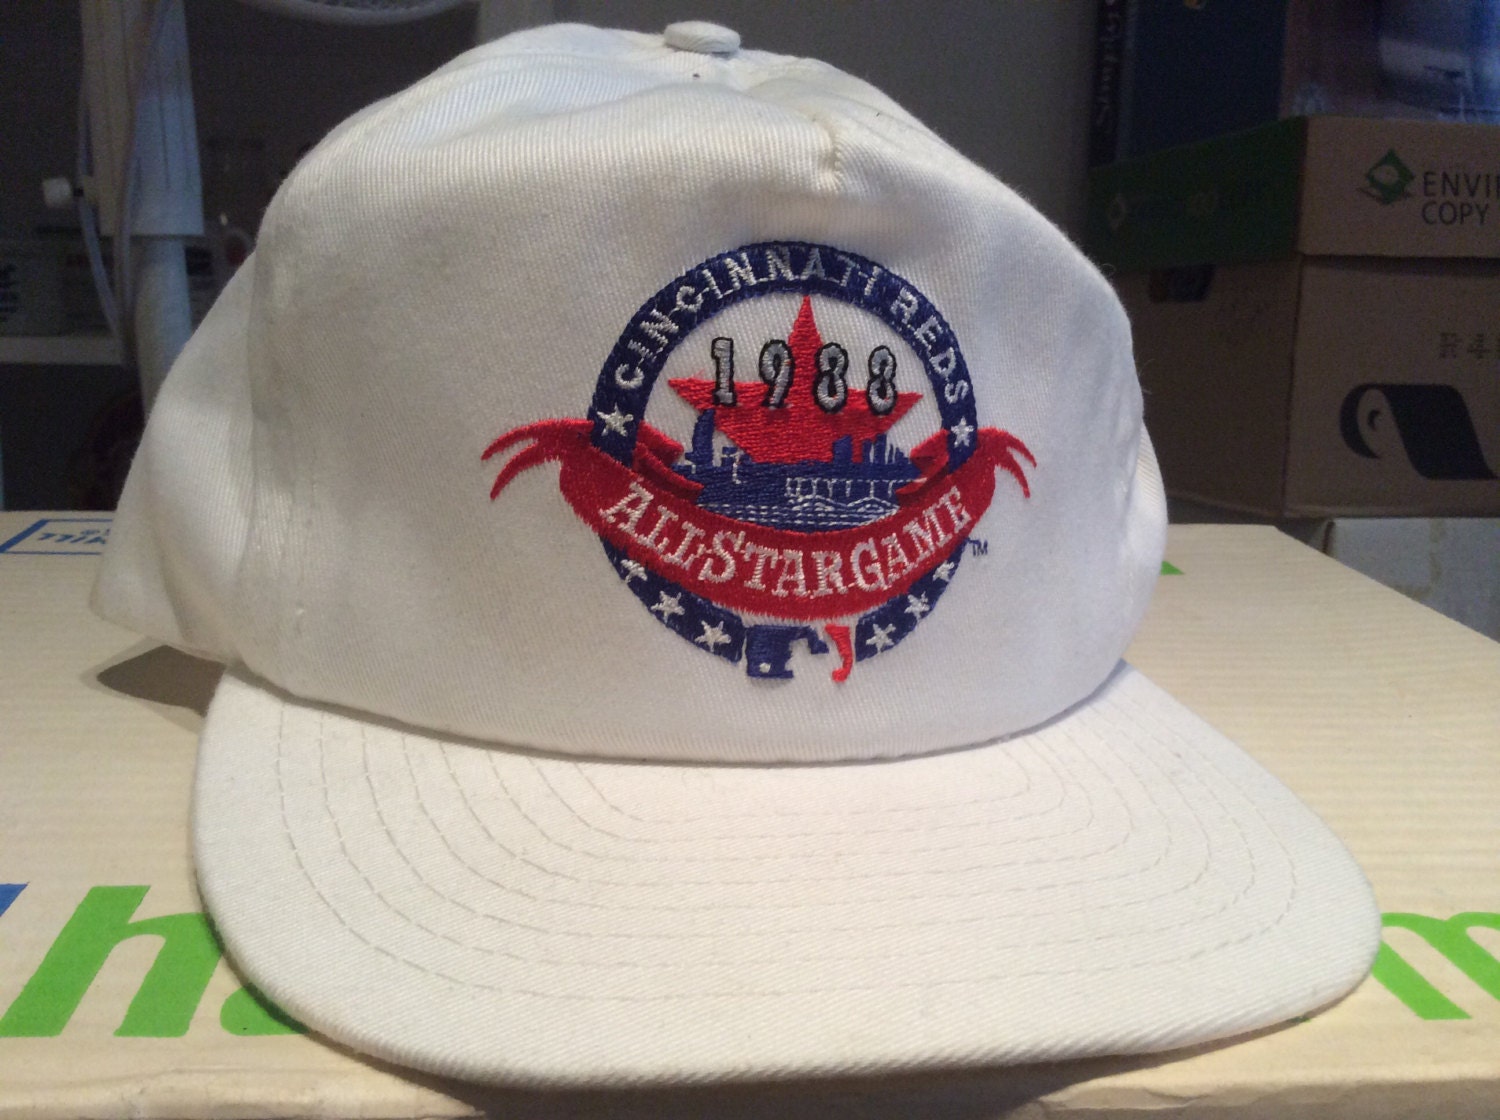 Vintage 1988 Major League Baseball All Star Game Hat Never